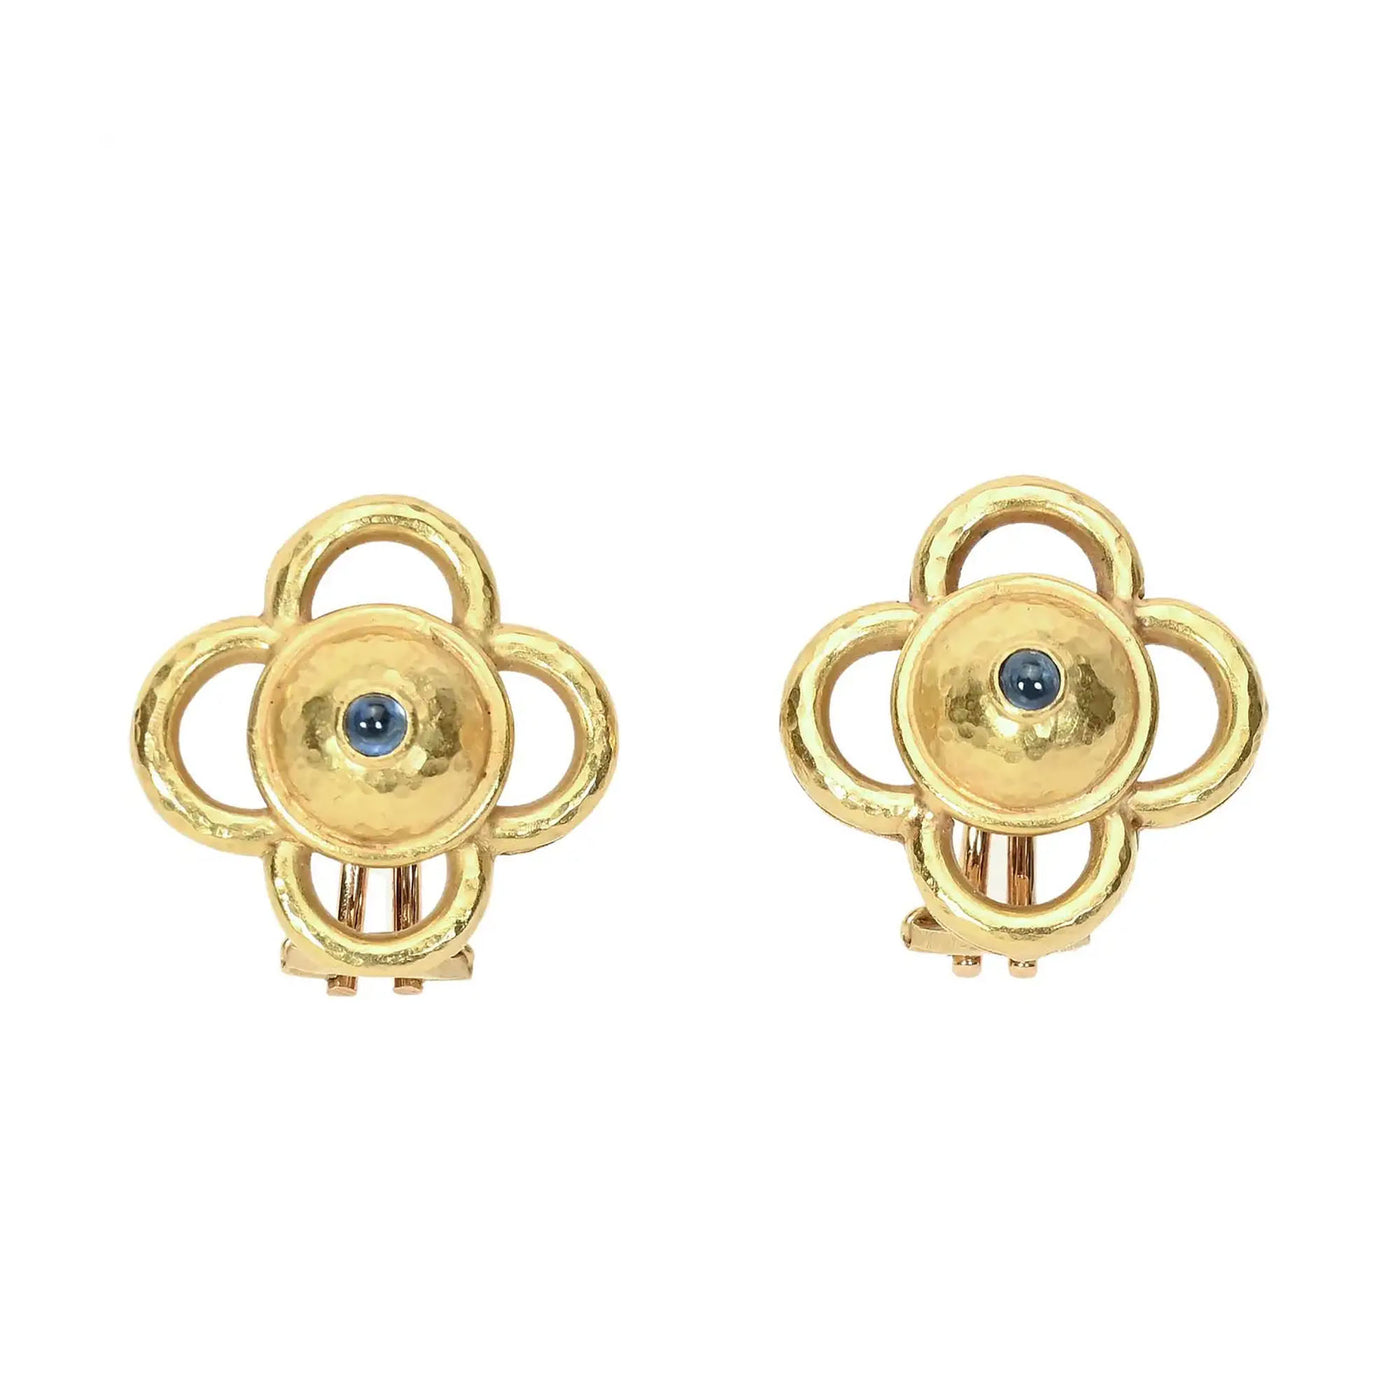 Elizabeth Locke Gold Earrings with Sapphires